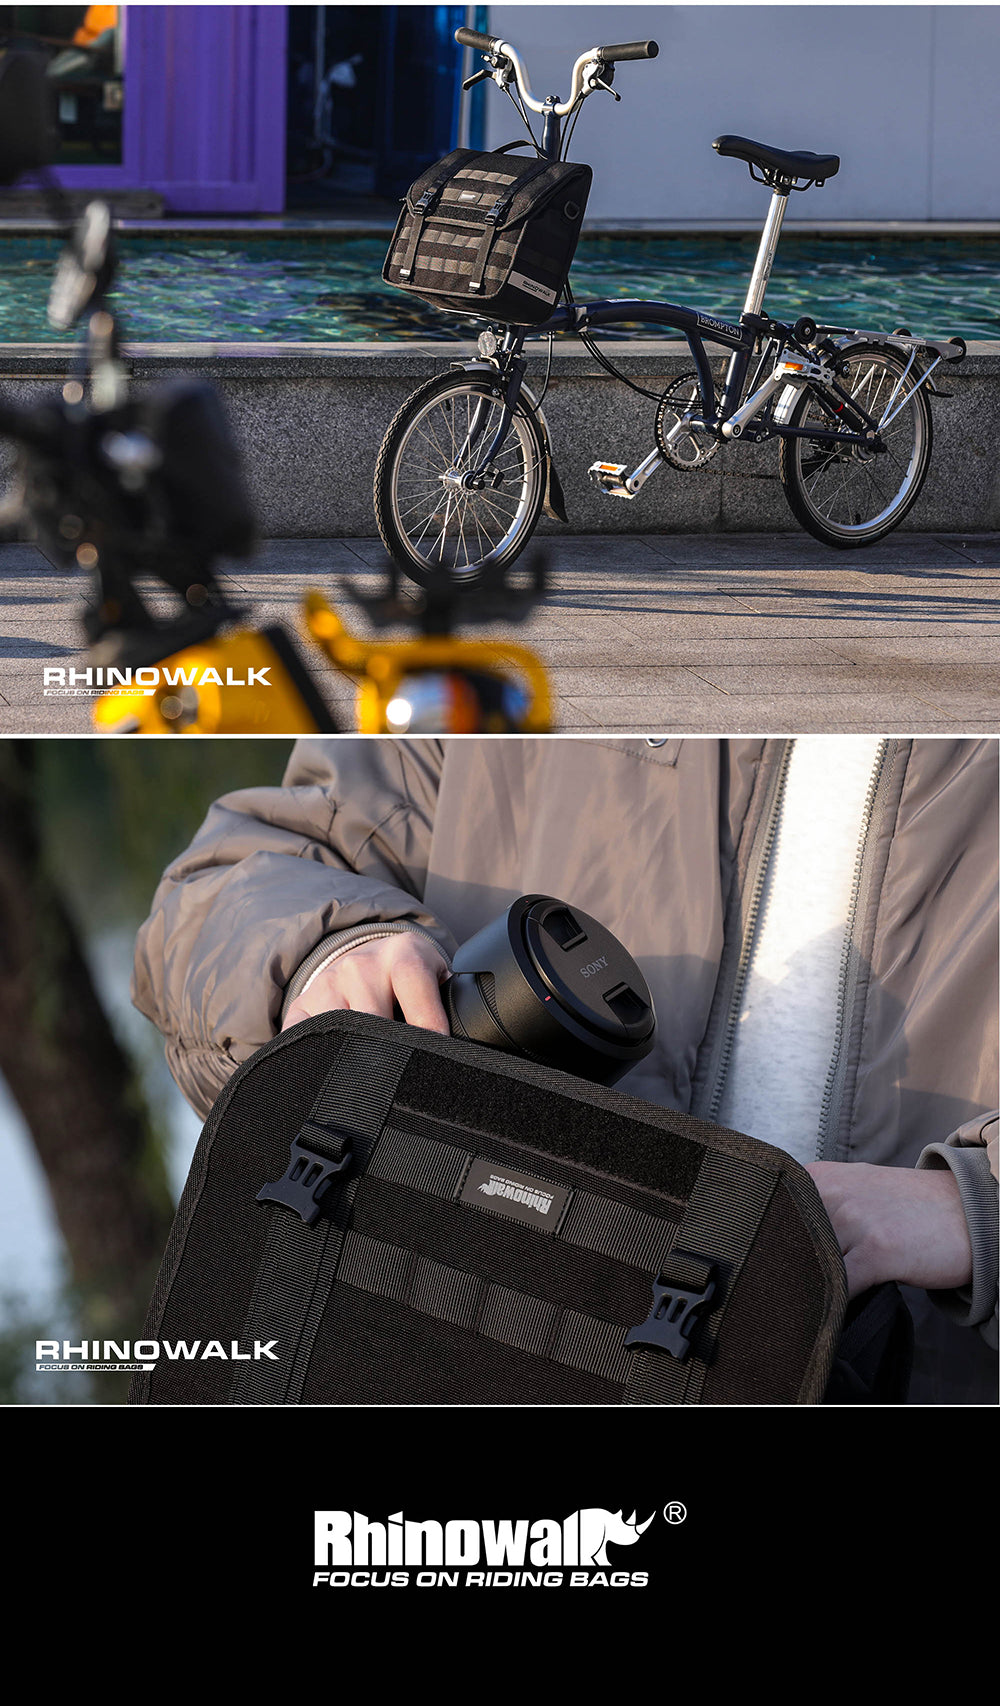 Quick release handlebar bag+mounting plate for Brompton Bikes